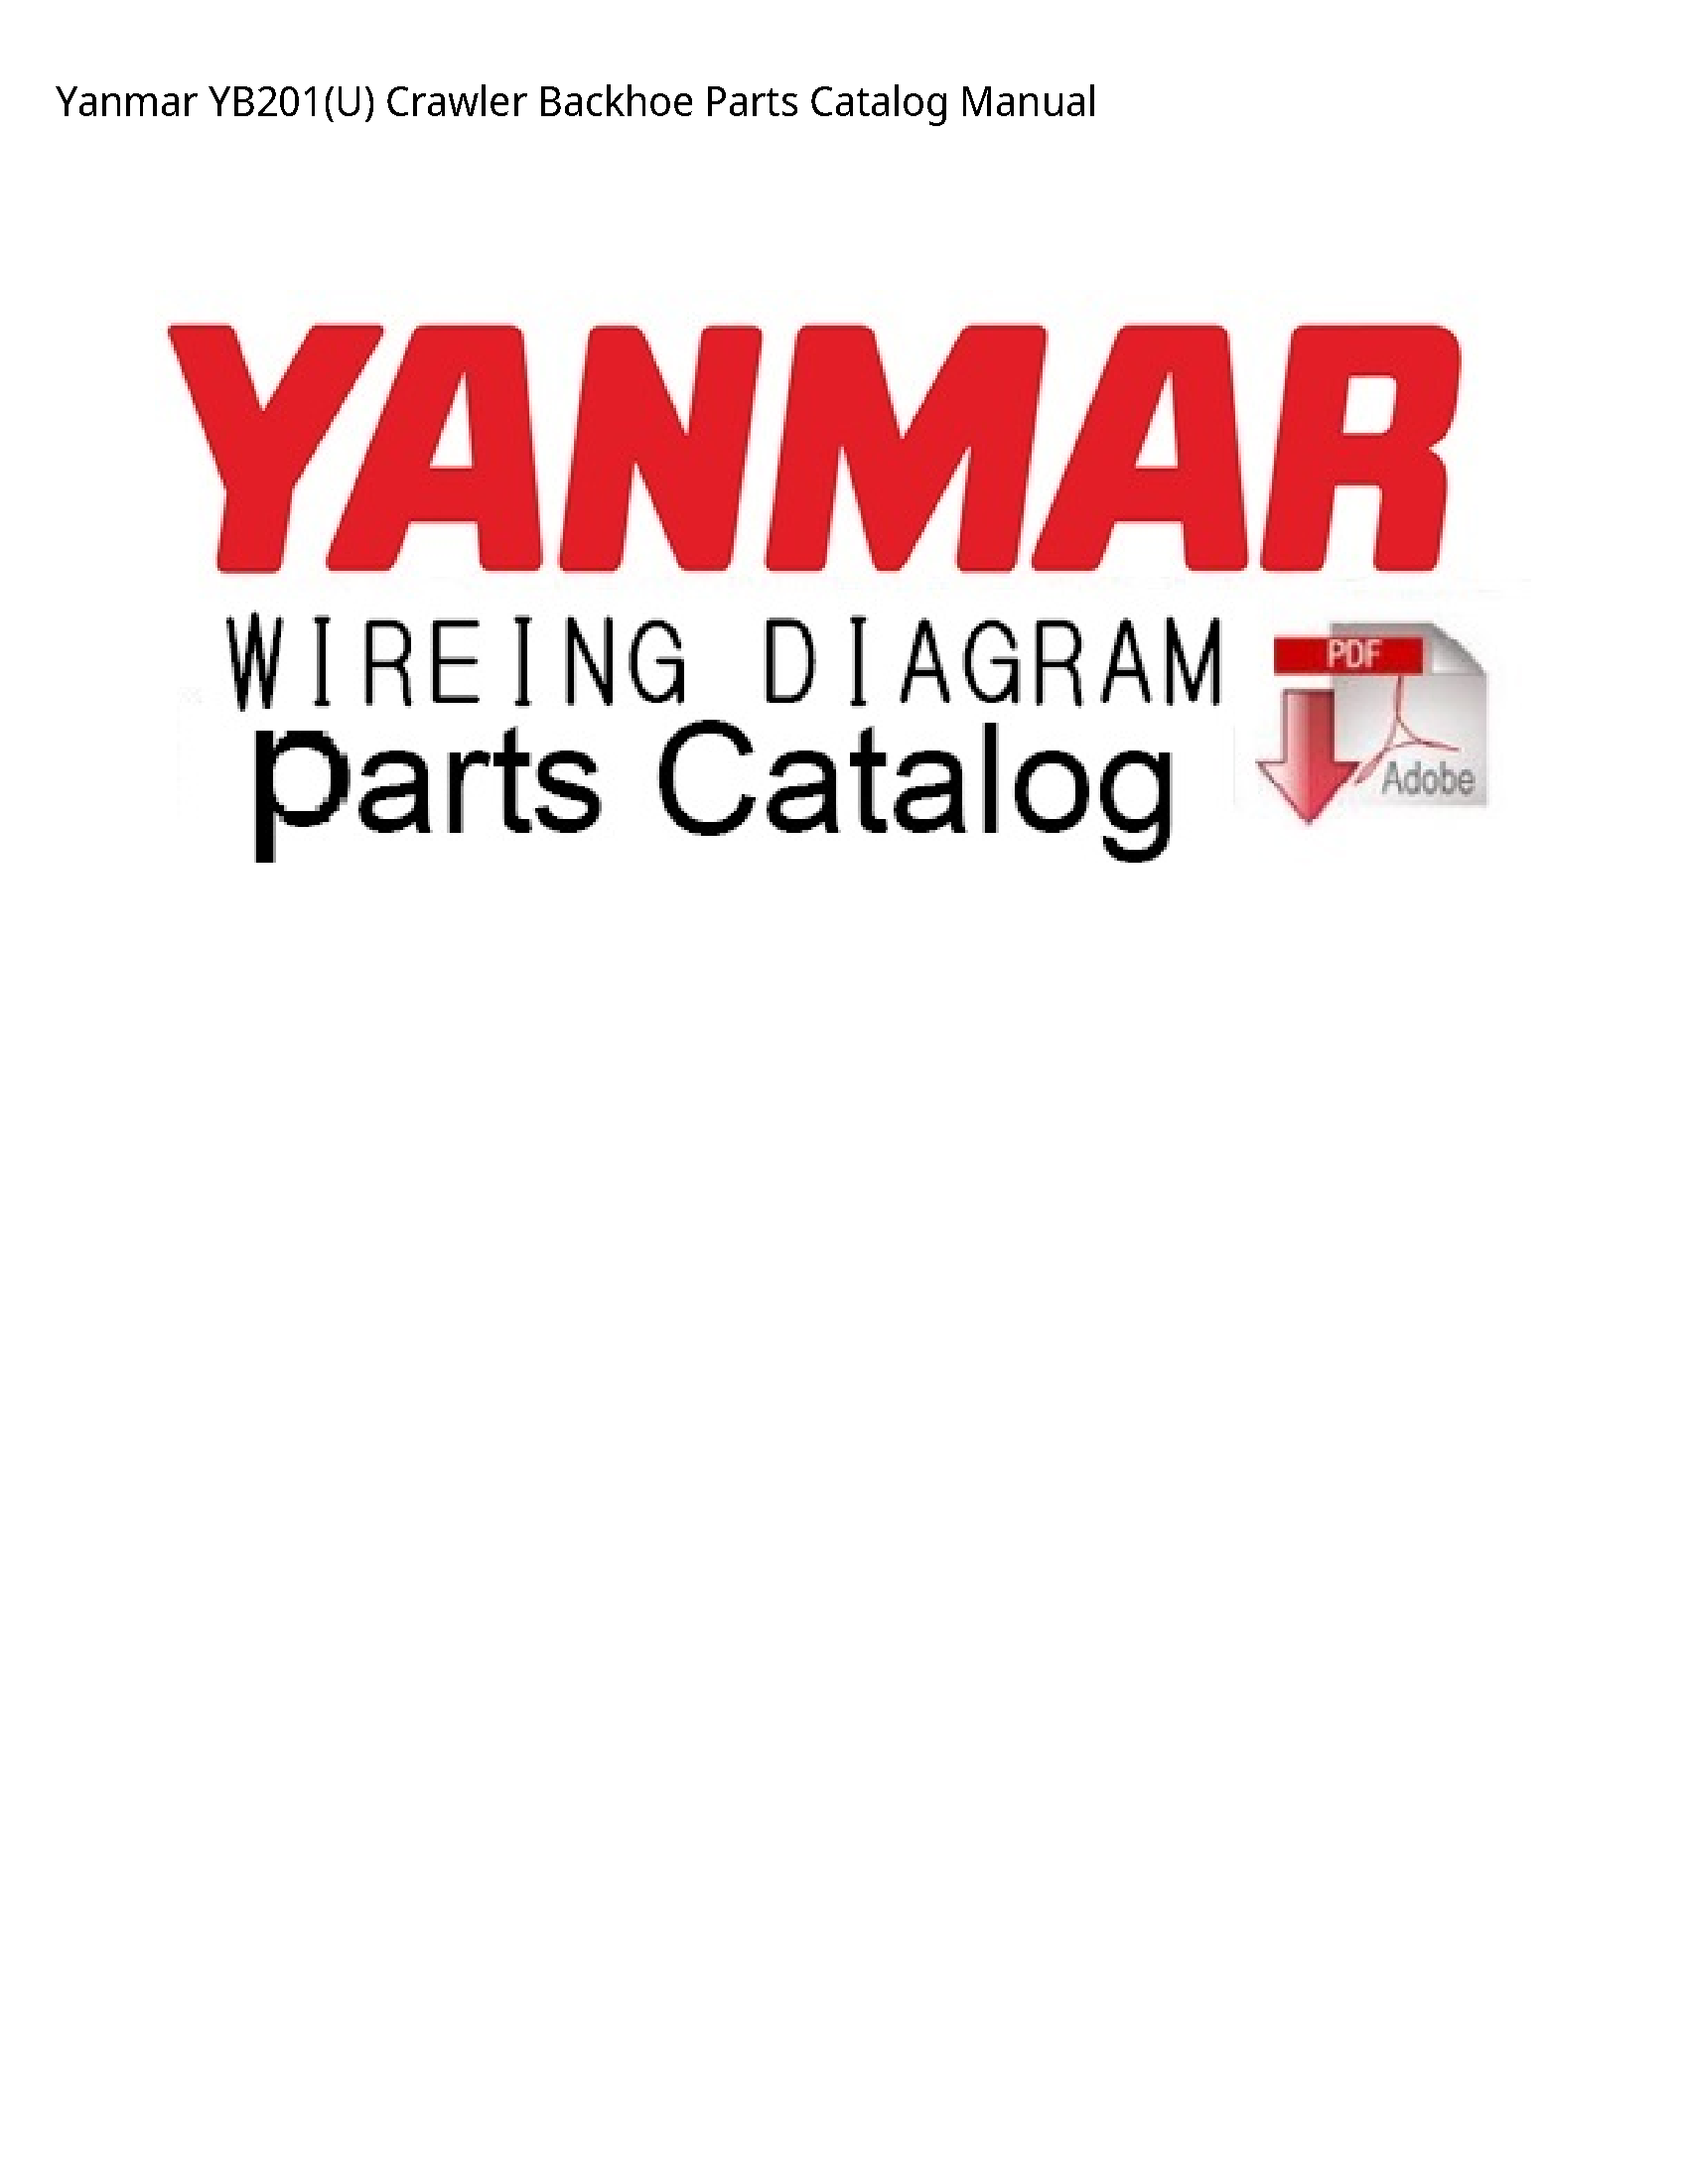 Yanmar YB201(U) Crawler Backhoe Parts Catalog manual